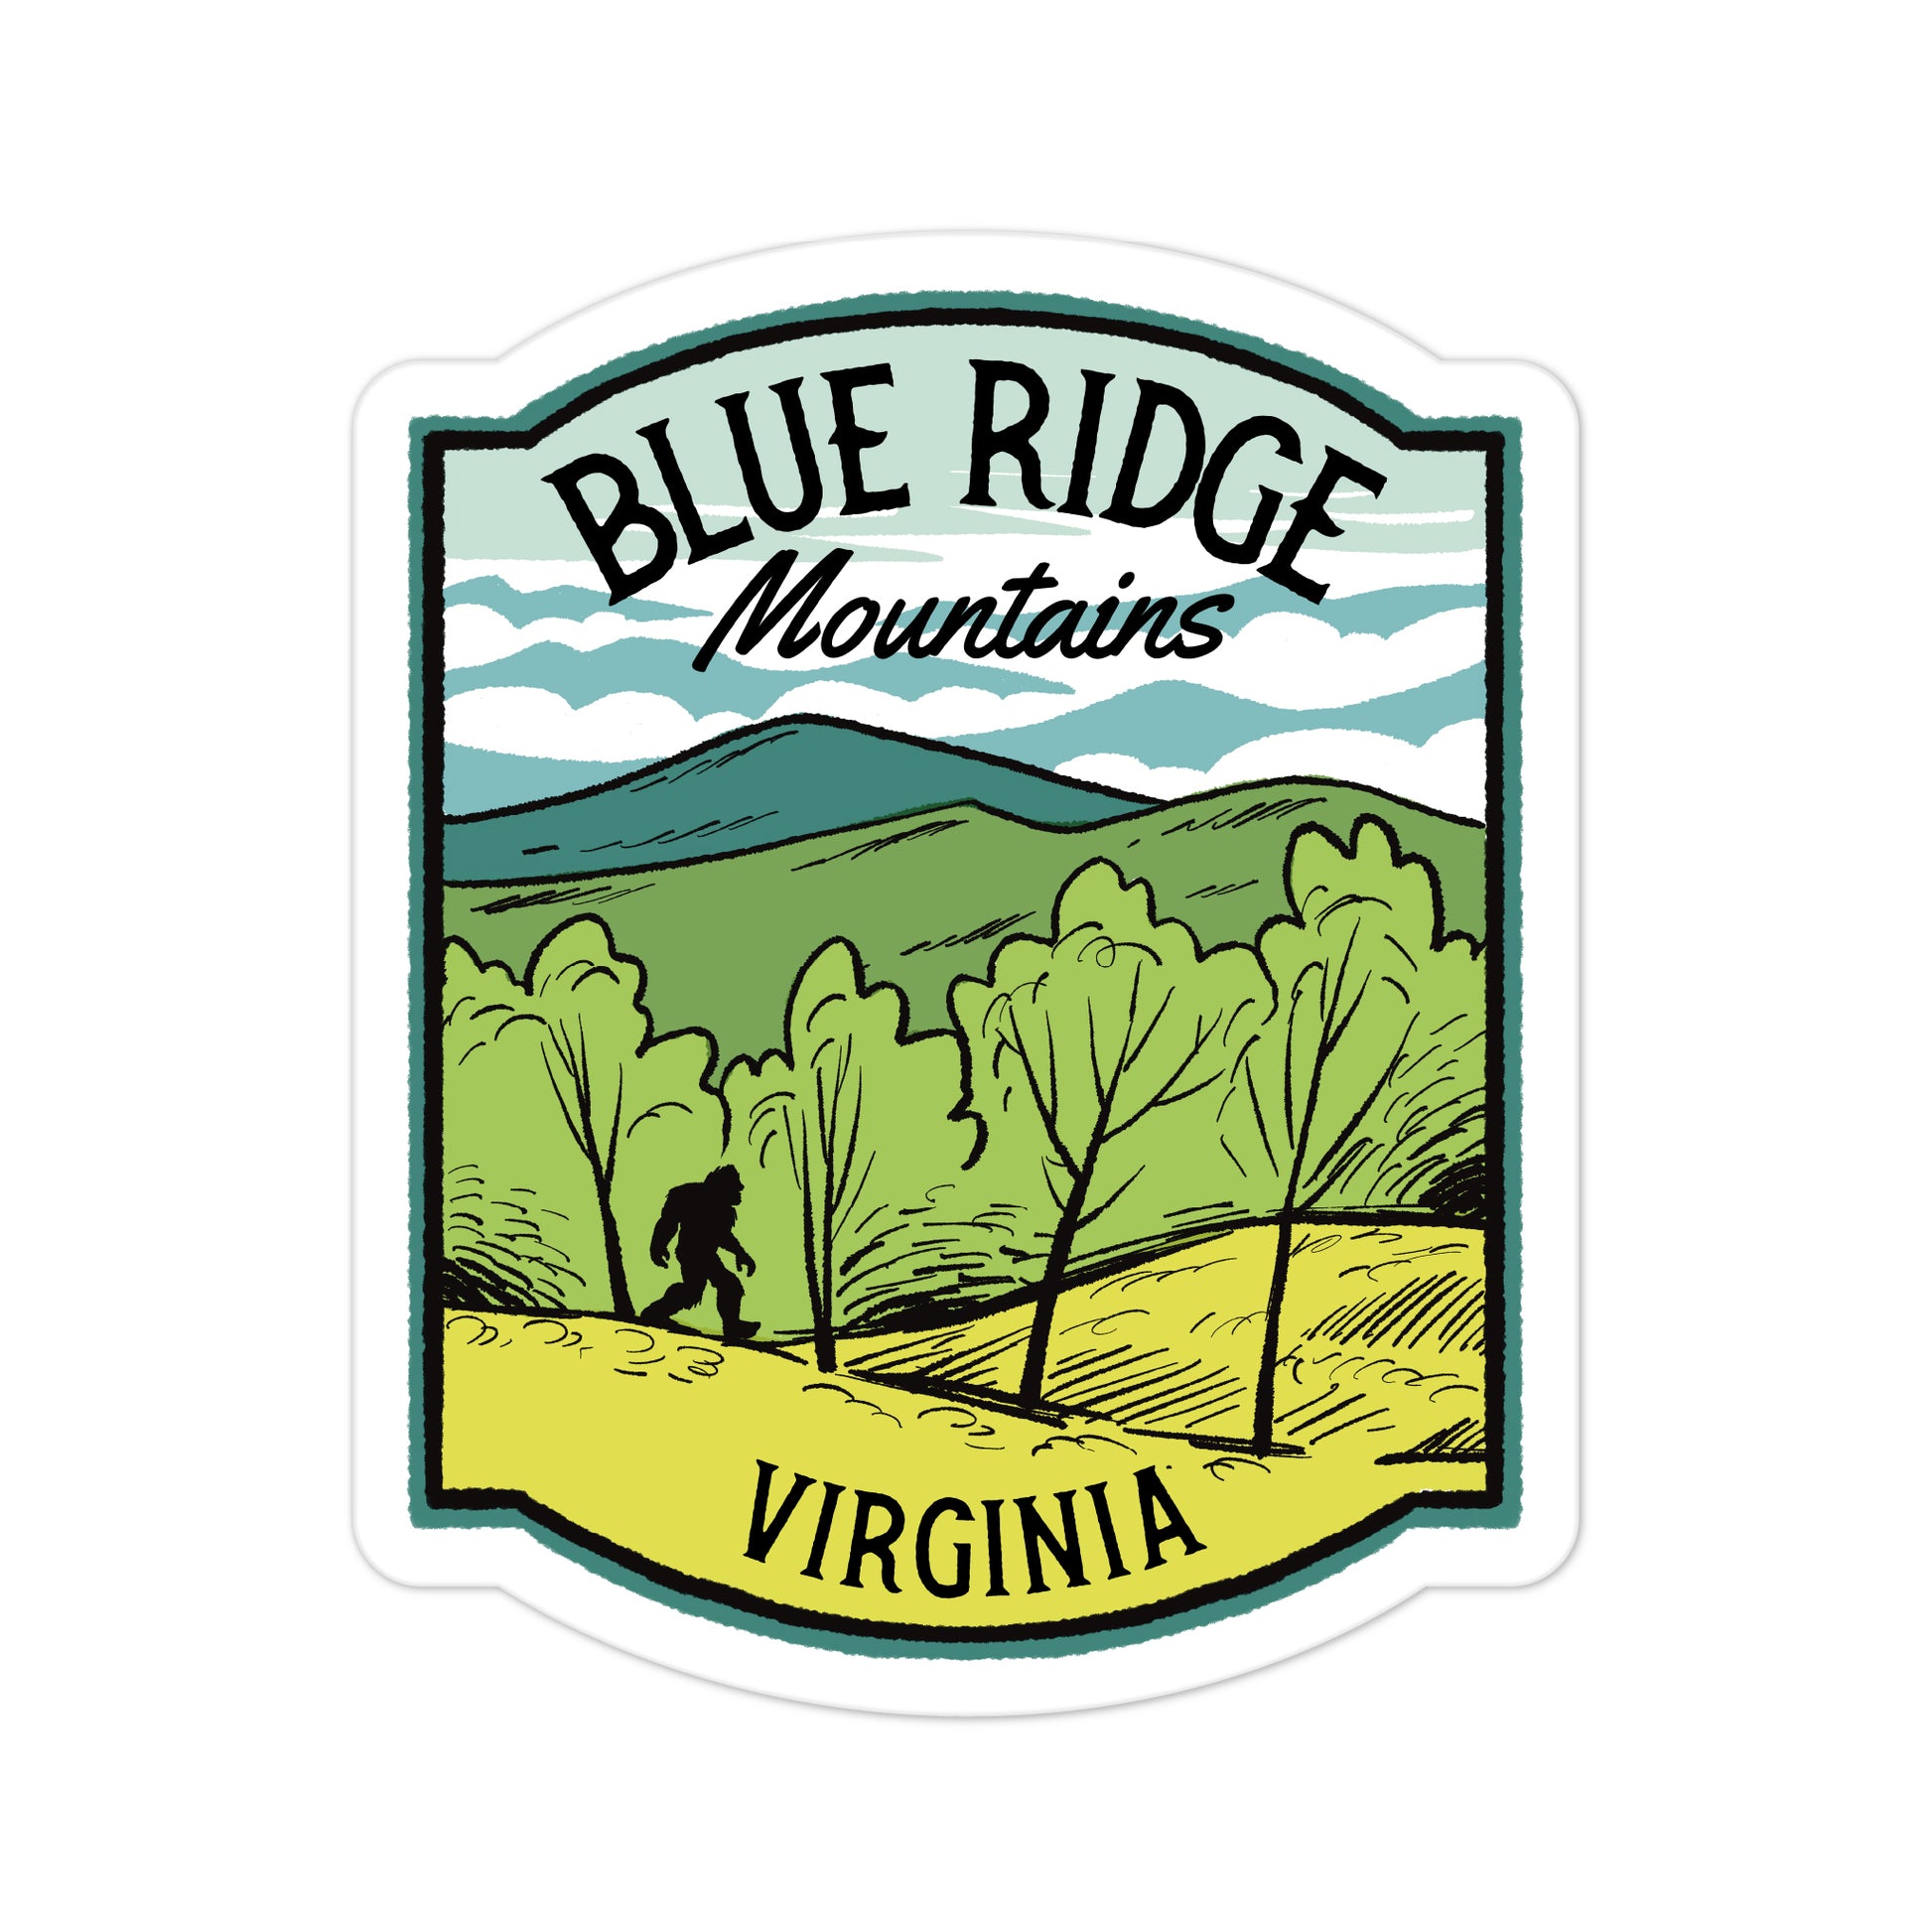 A sticker of the Blue Ridge Mountains